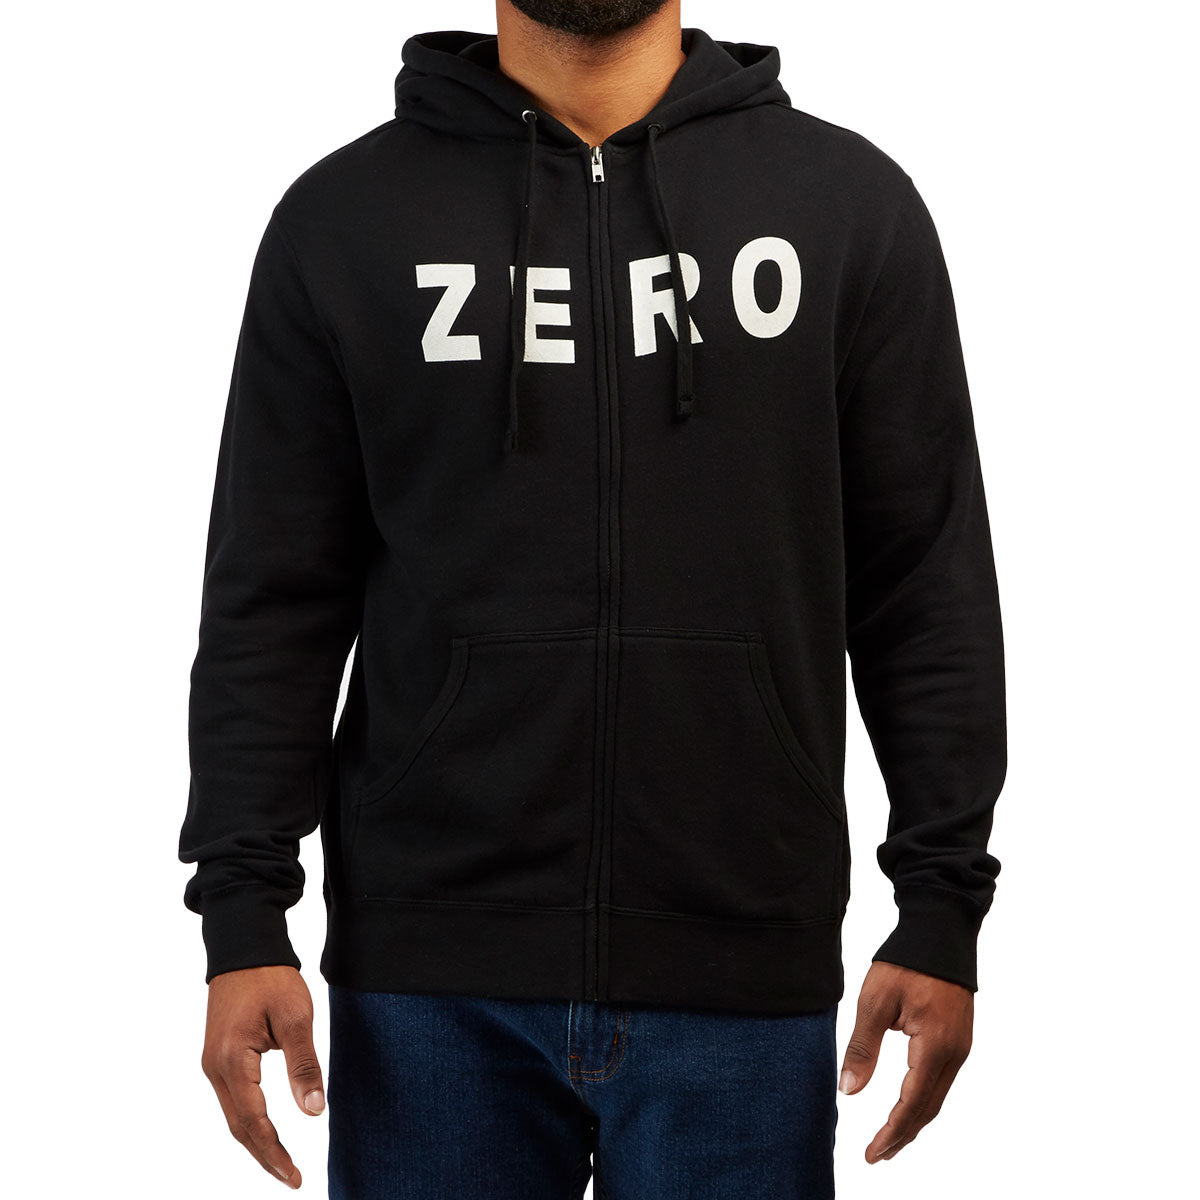 Zero Army Zip Hoodie - Black image 1